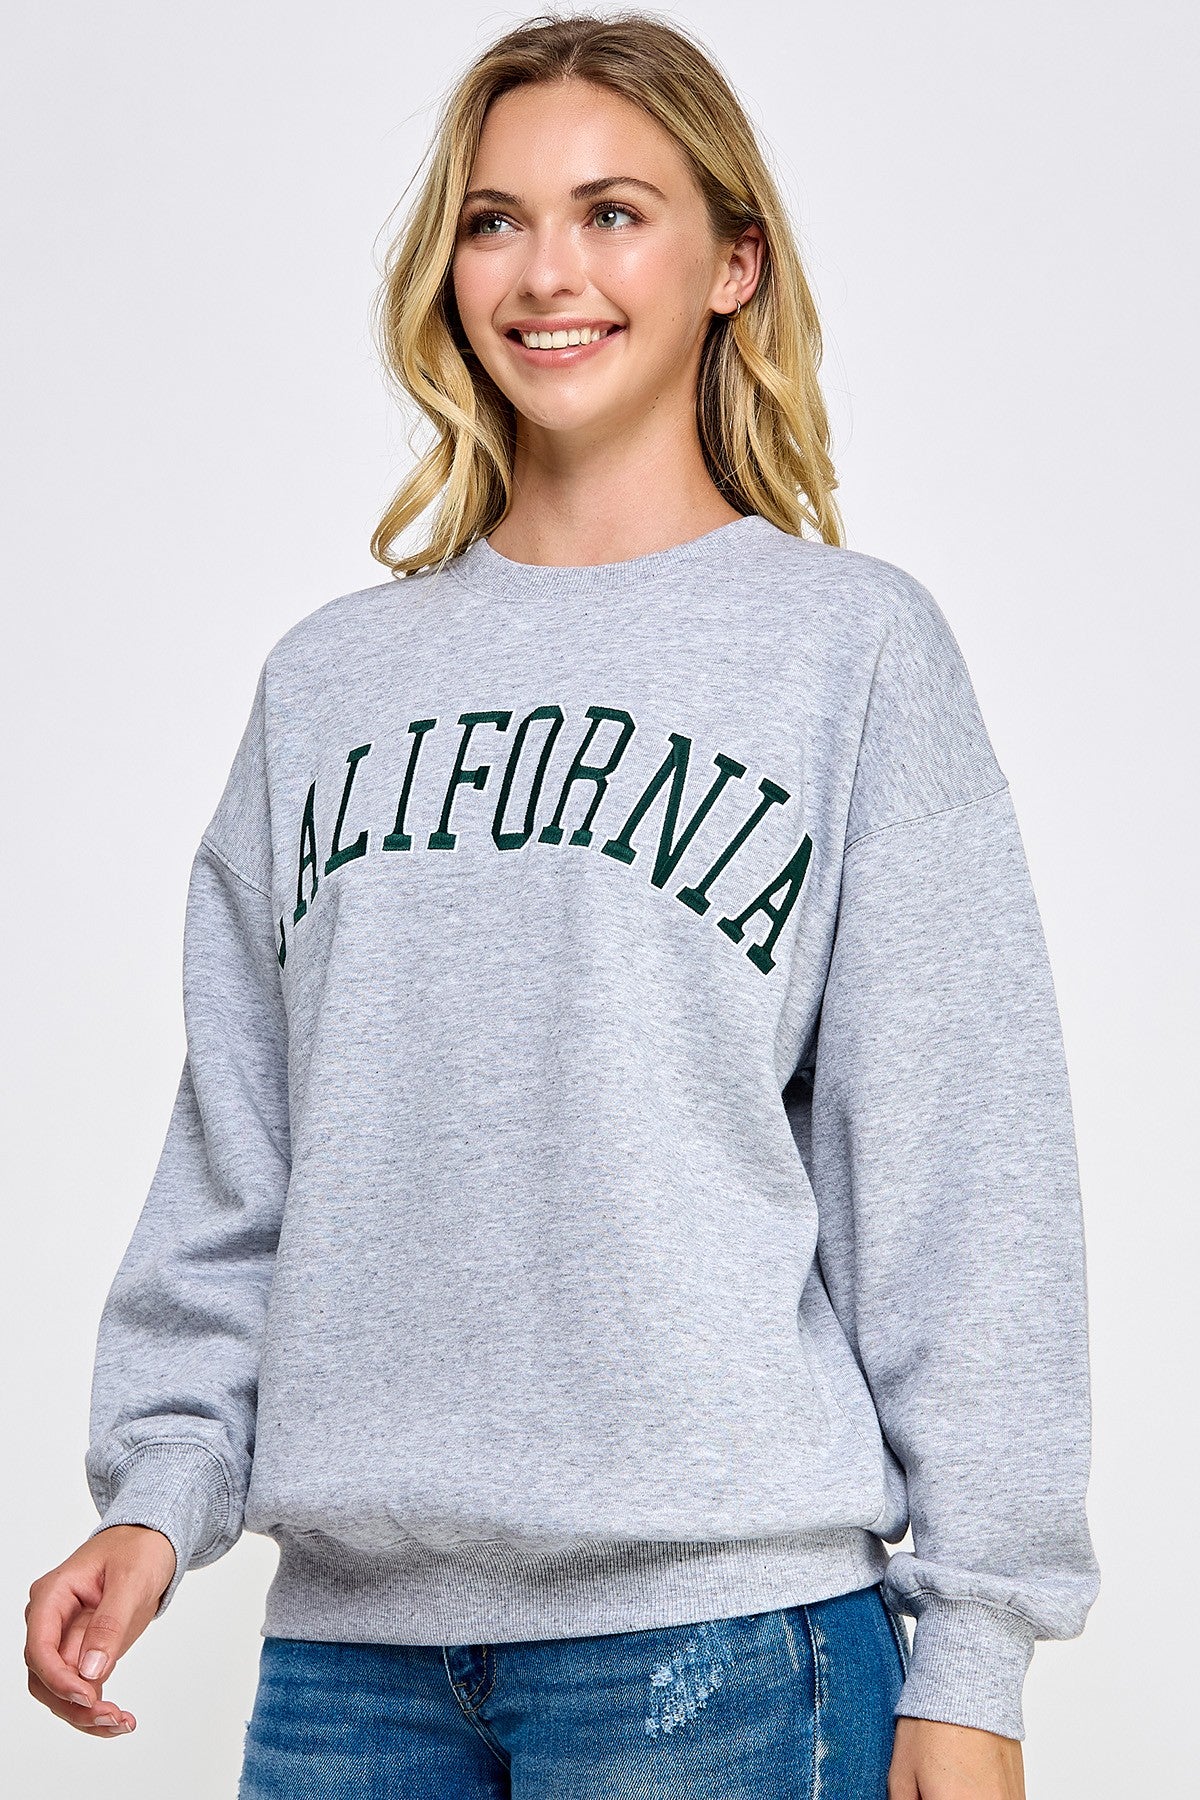 California Emblem Vintage Sweater Gray/Green